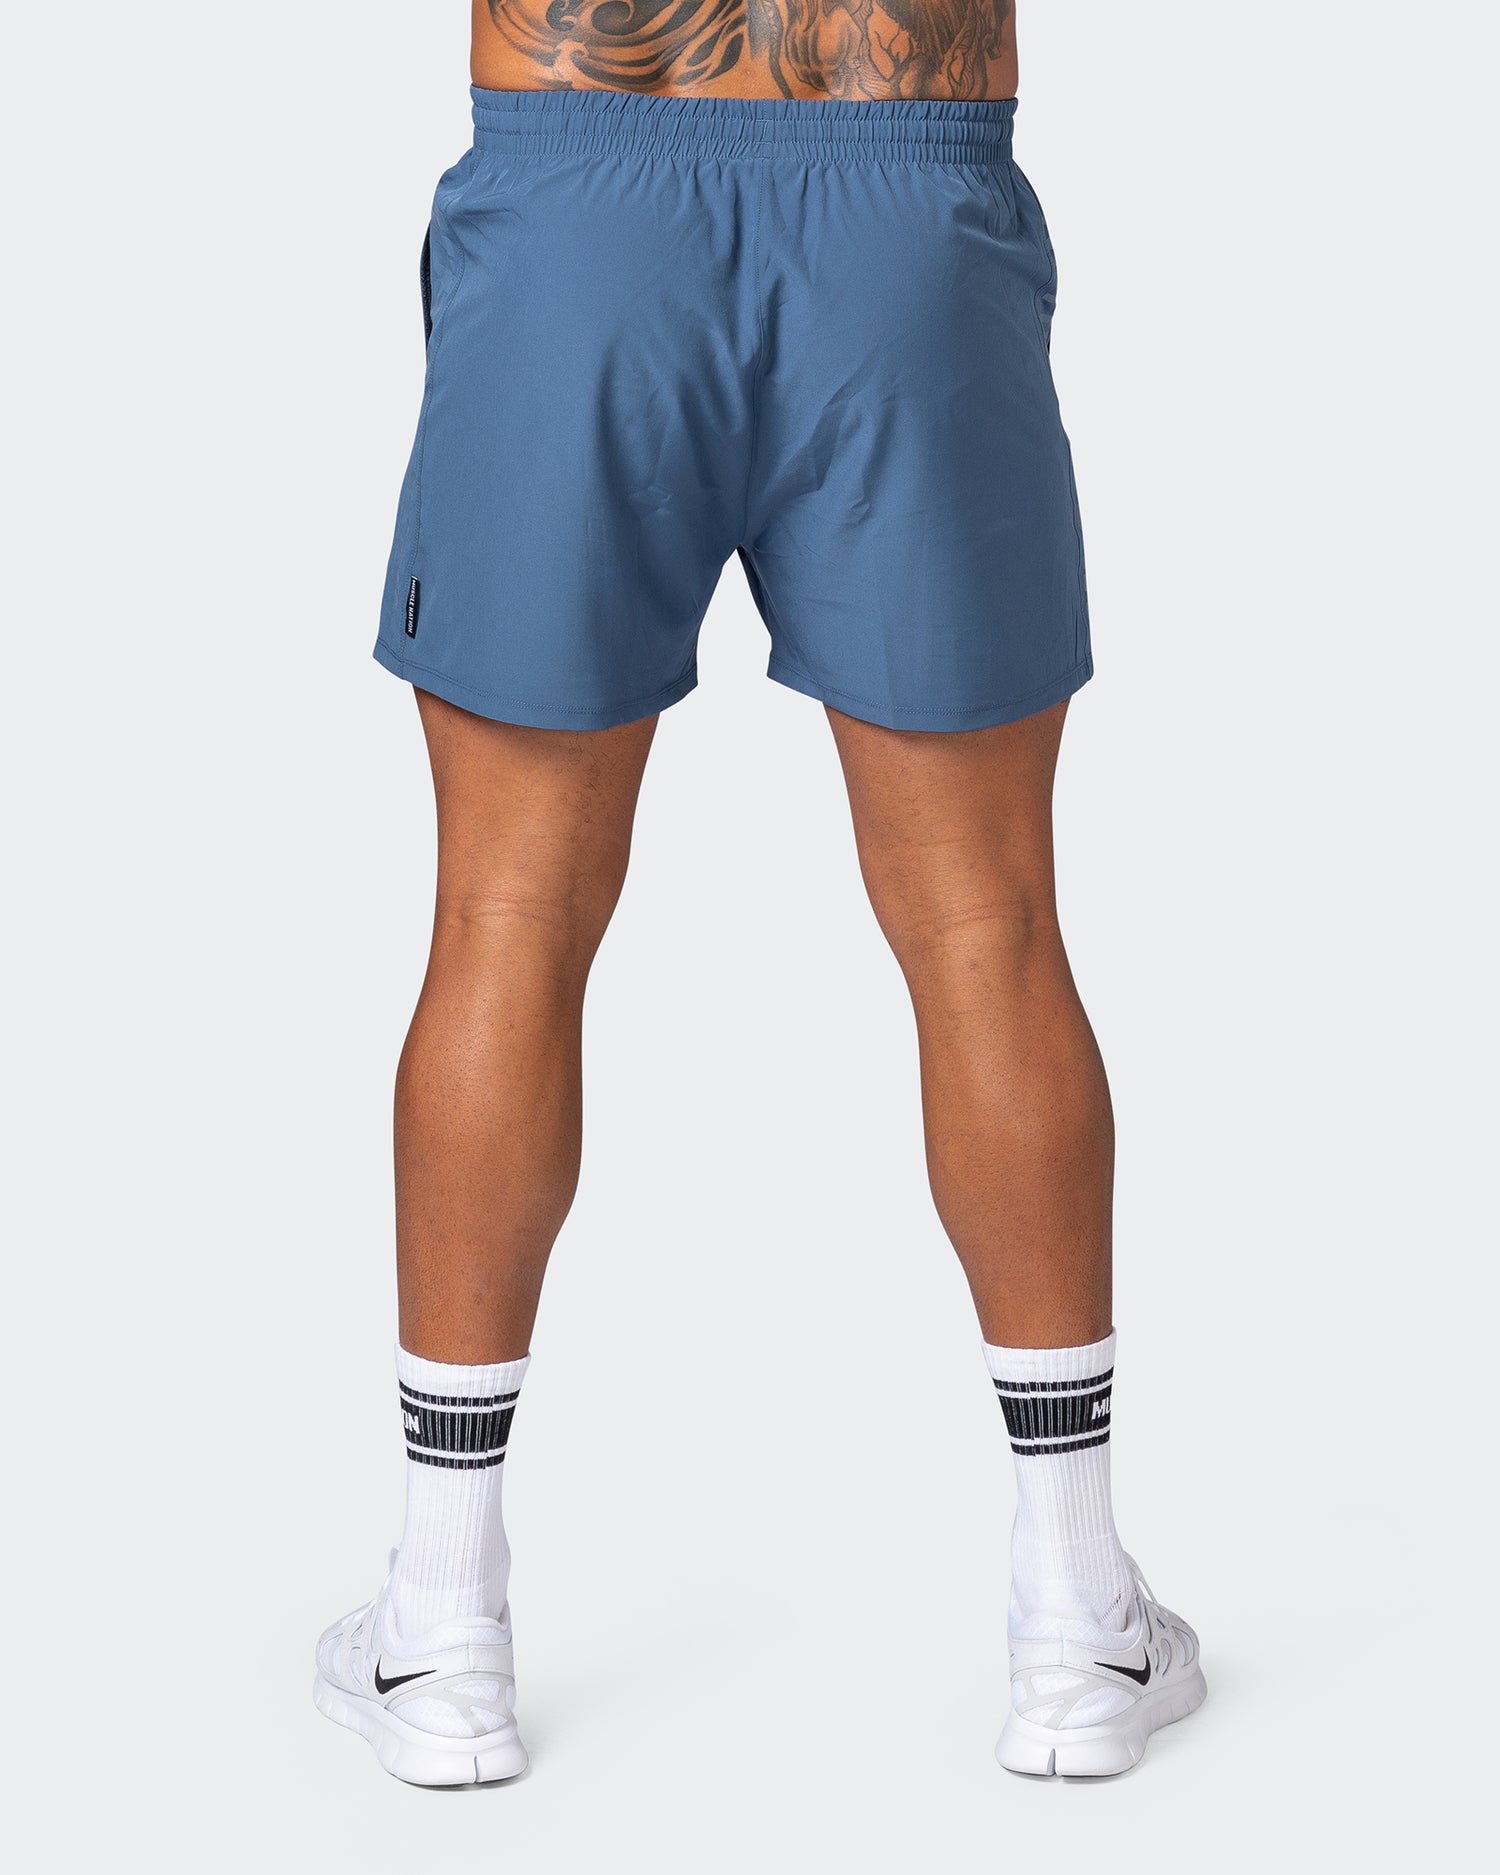 Function 4" Shorts - Denim Blue